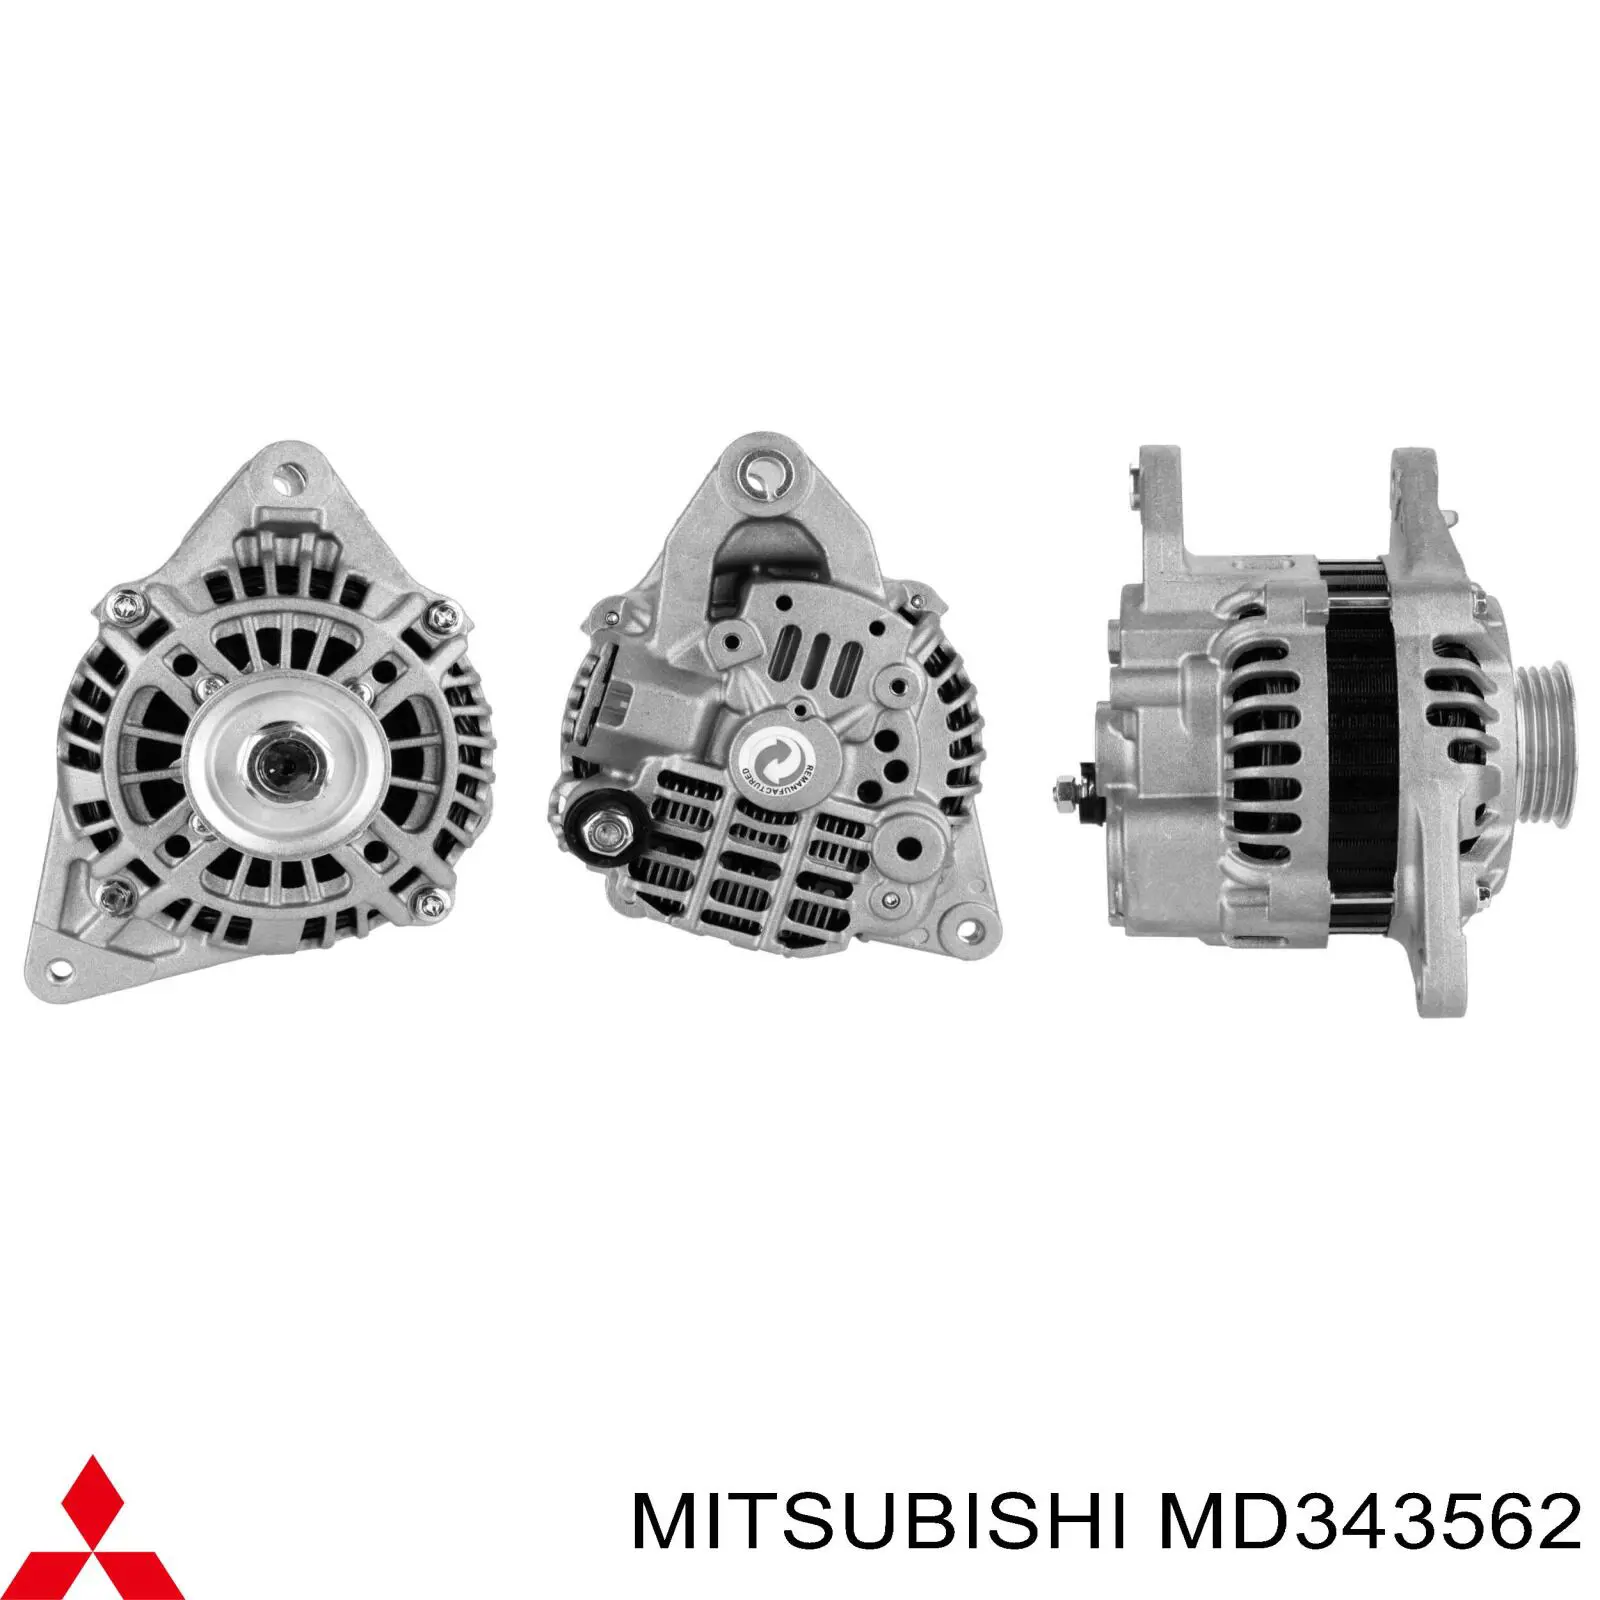 MD343562 Mitsubishi gerador